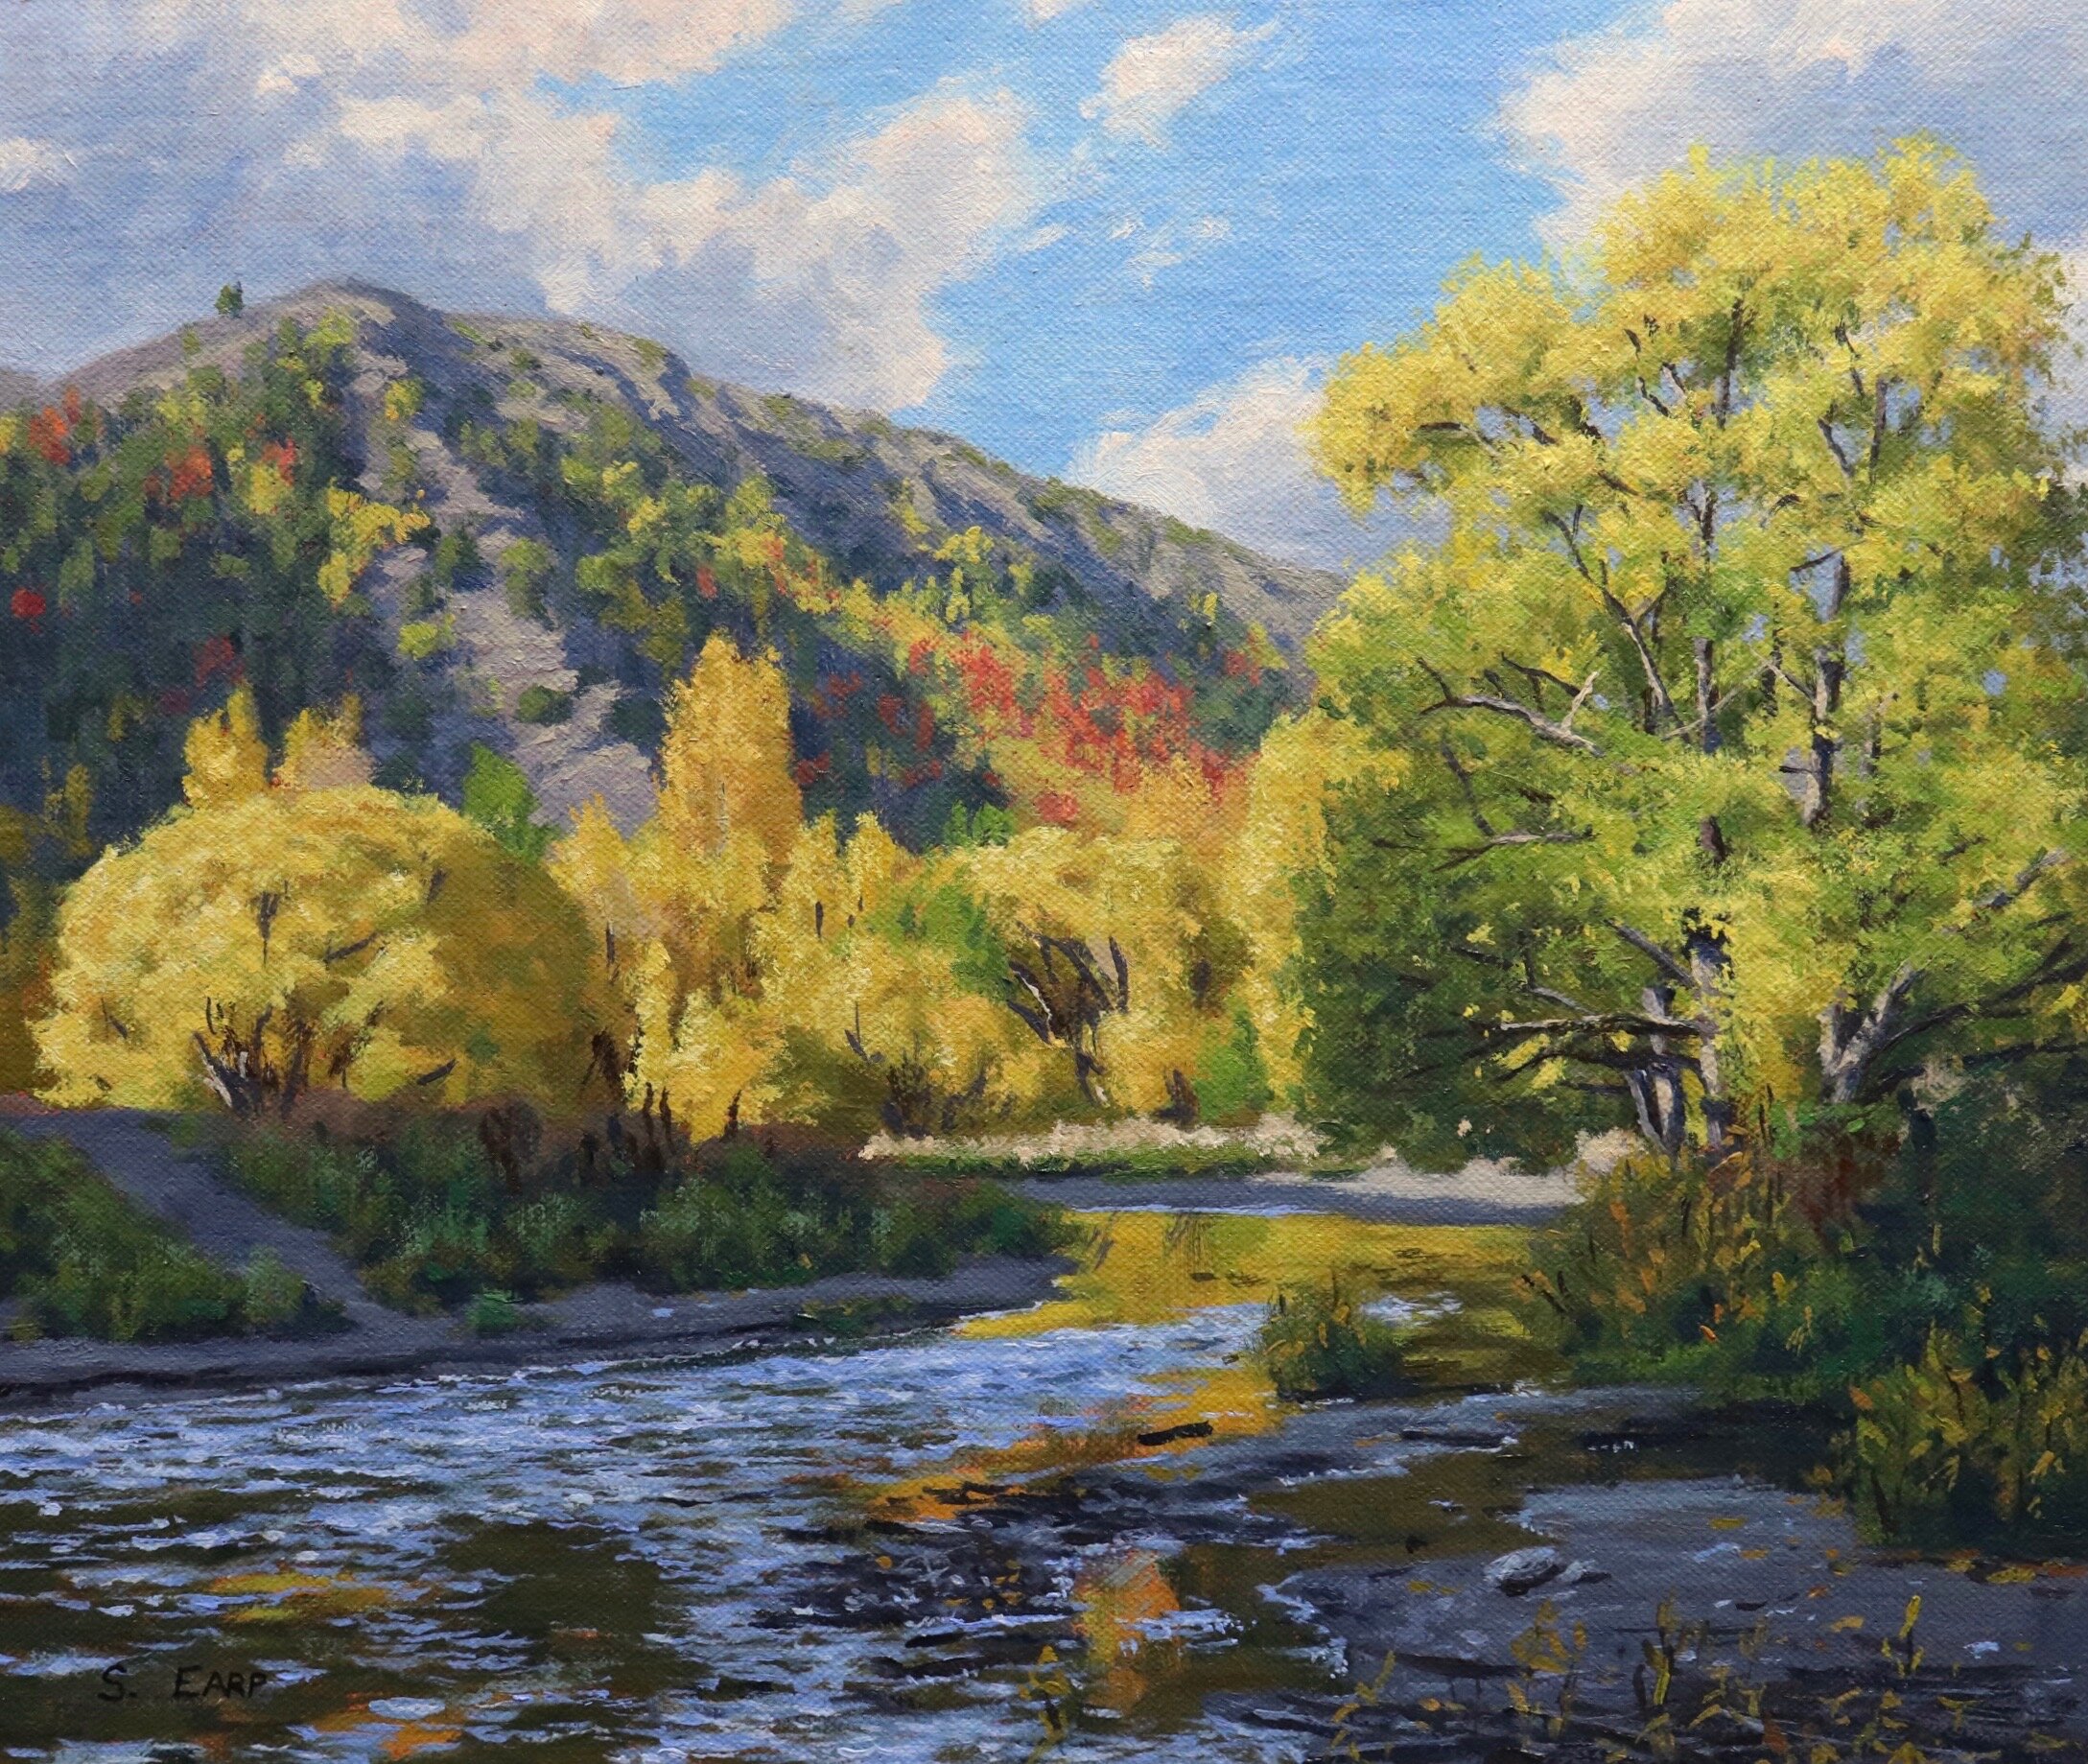 Autumn Trees - Arrowtown - oil painting - Samuel Earp Landscape Artist.jpeg